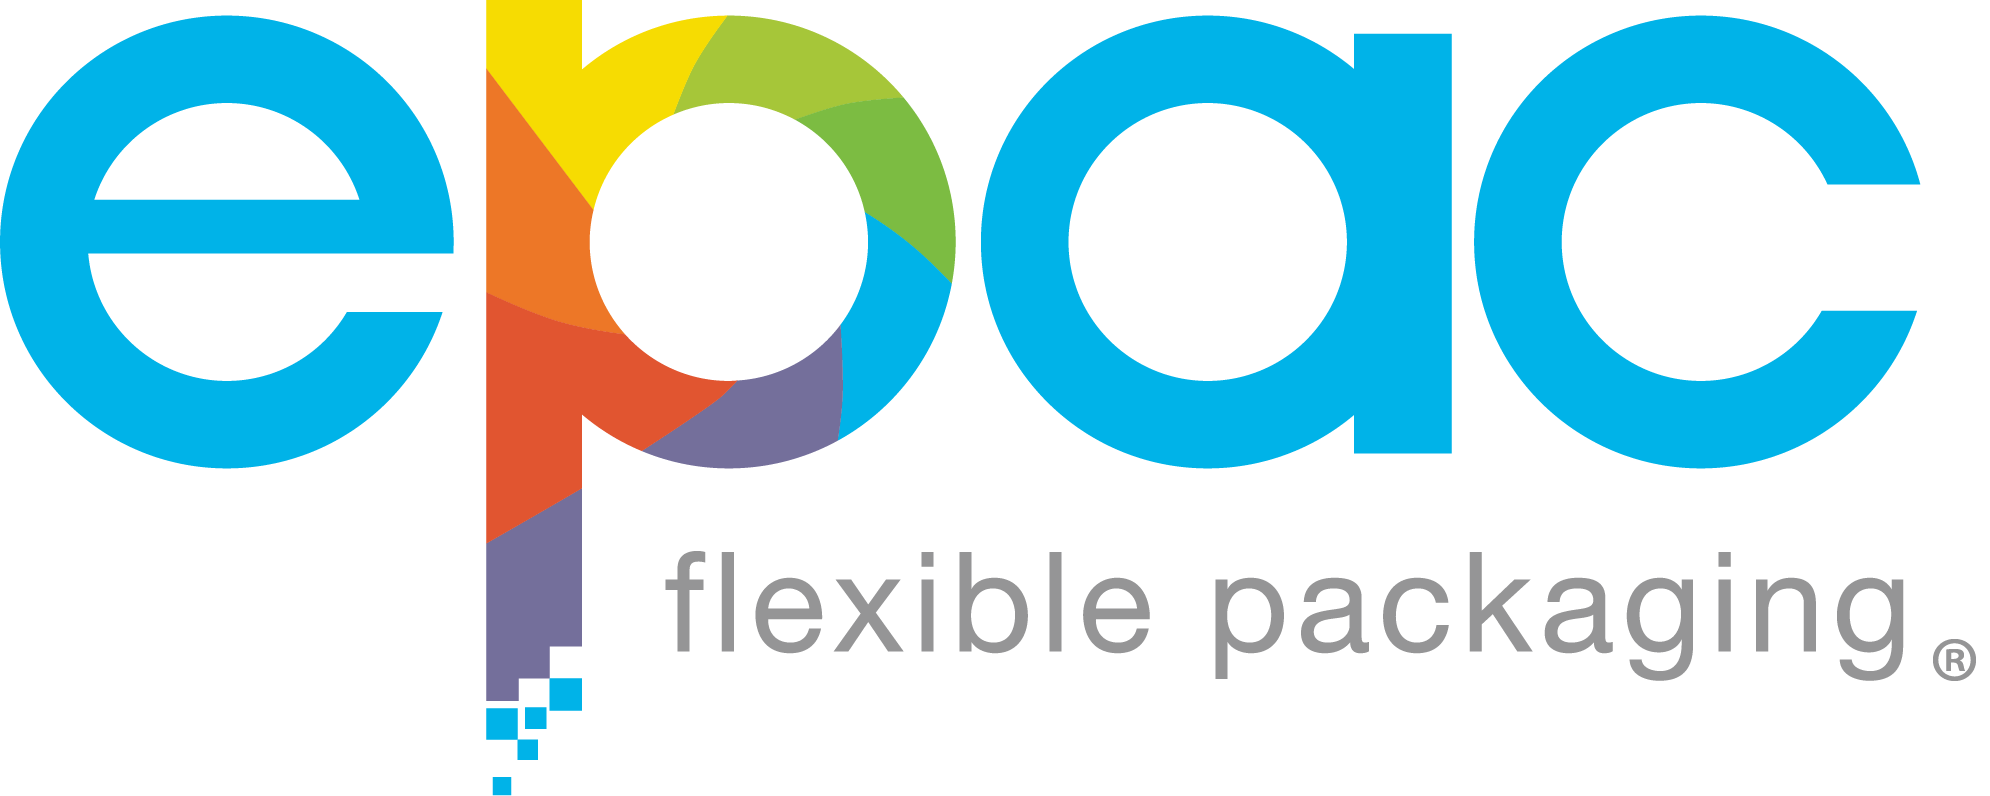 ePac Flexible Packag